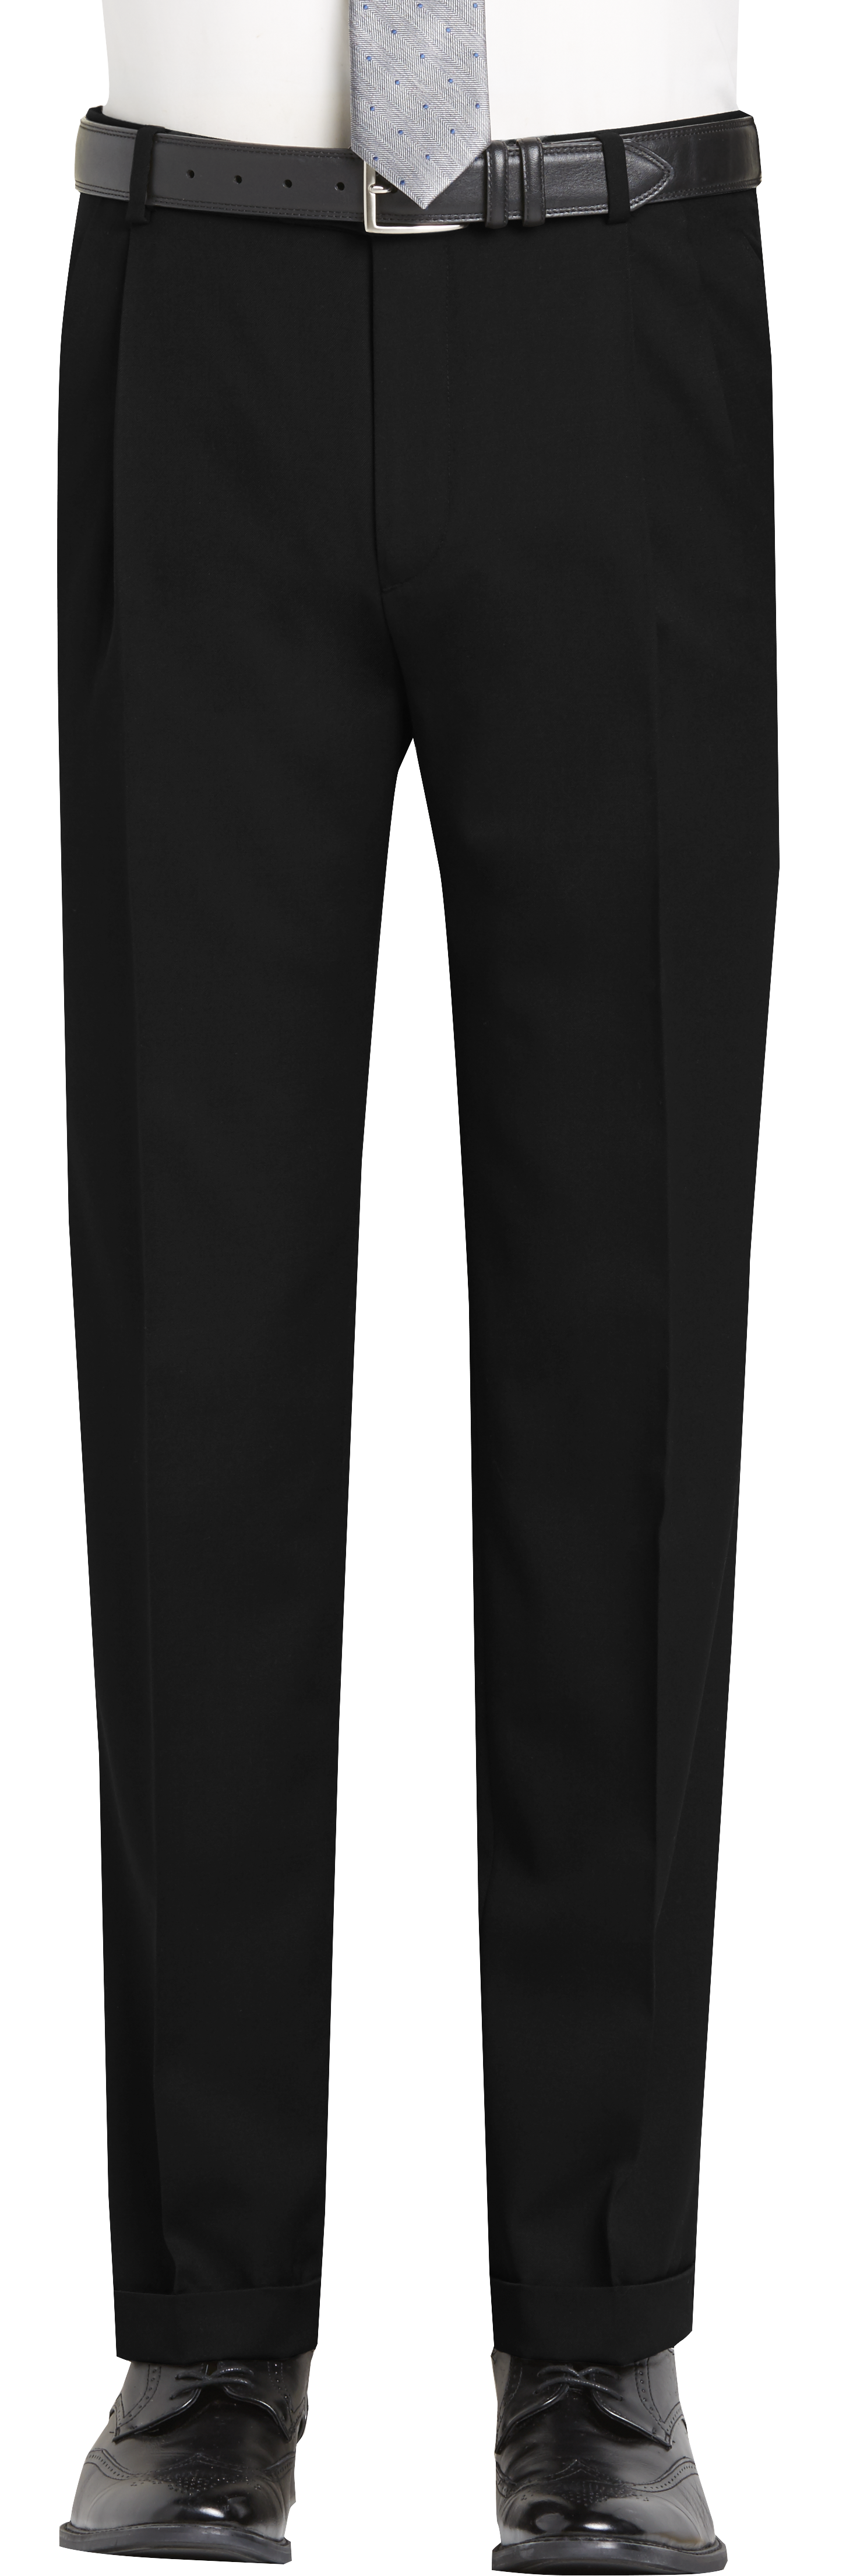 Pronto Uomo Platinum Suit Separates Modern Fit Pleated Slacks, Black ...